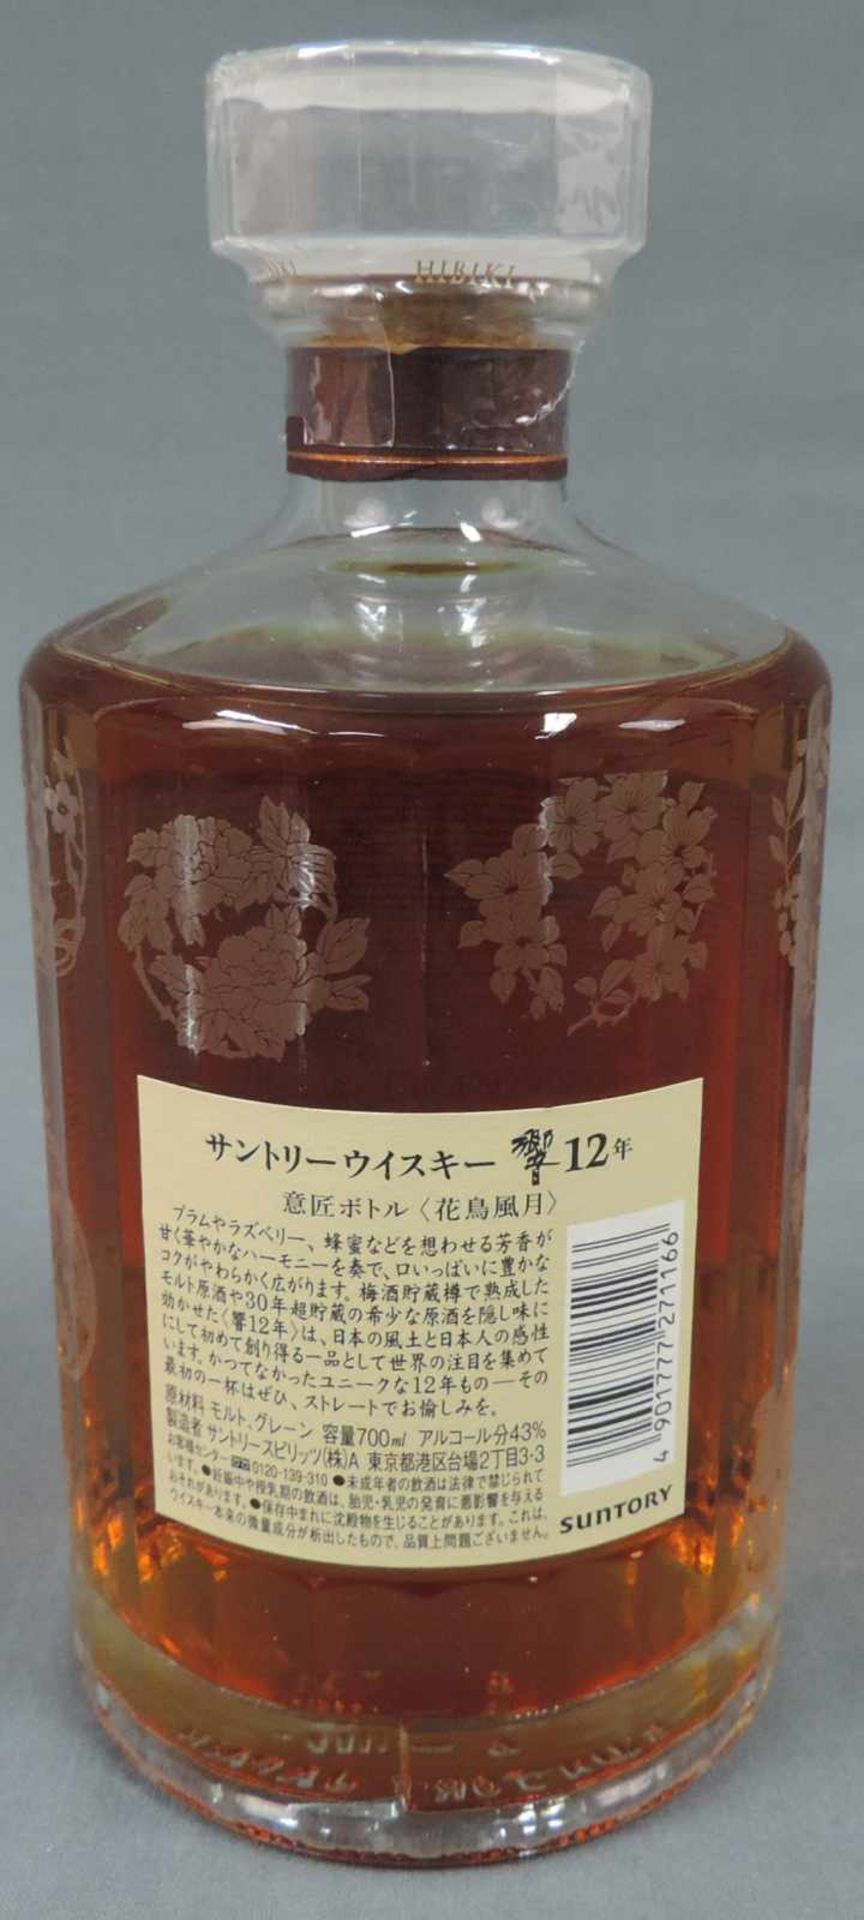 Hibiki Sutory Whiskey 12 years old. Kacho Fugetsu Special Limited Edition. Original Box. Eine - Bild 2 aus 4